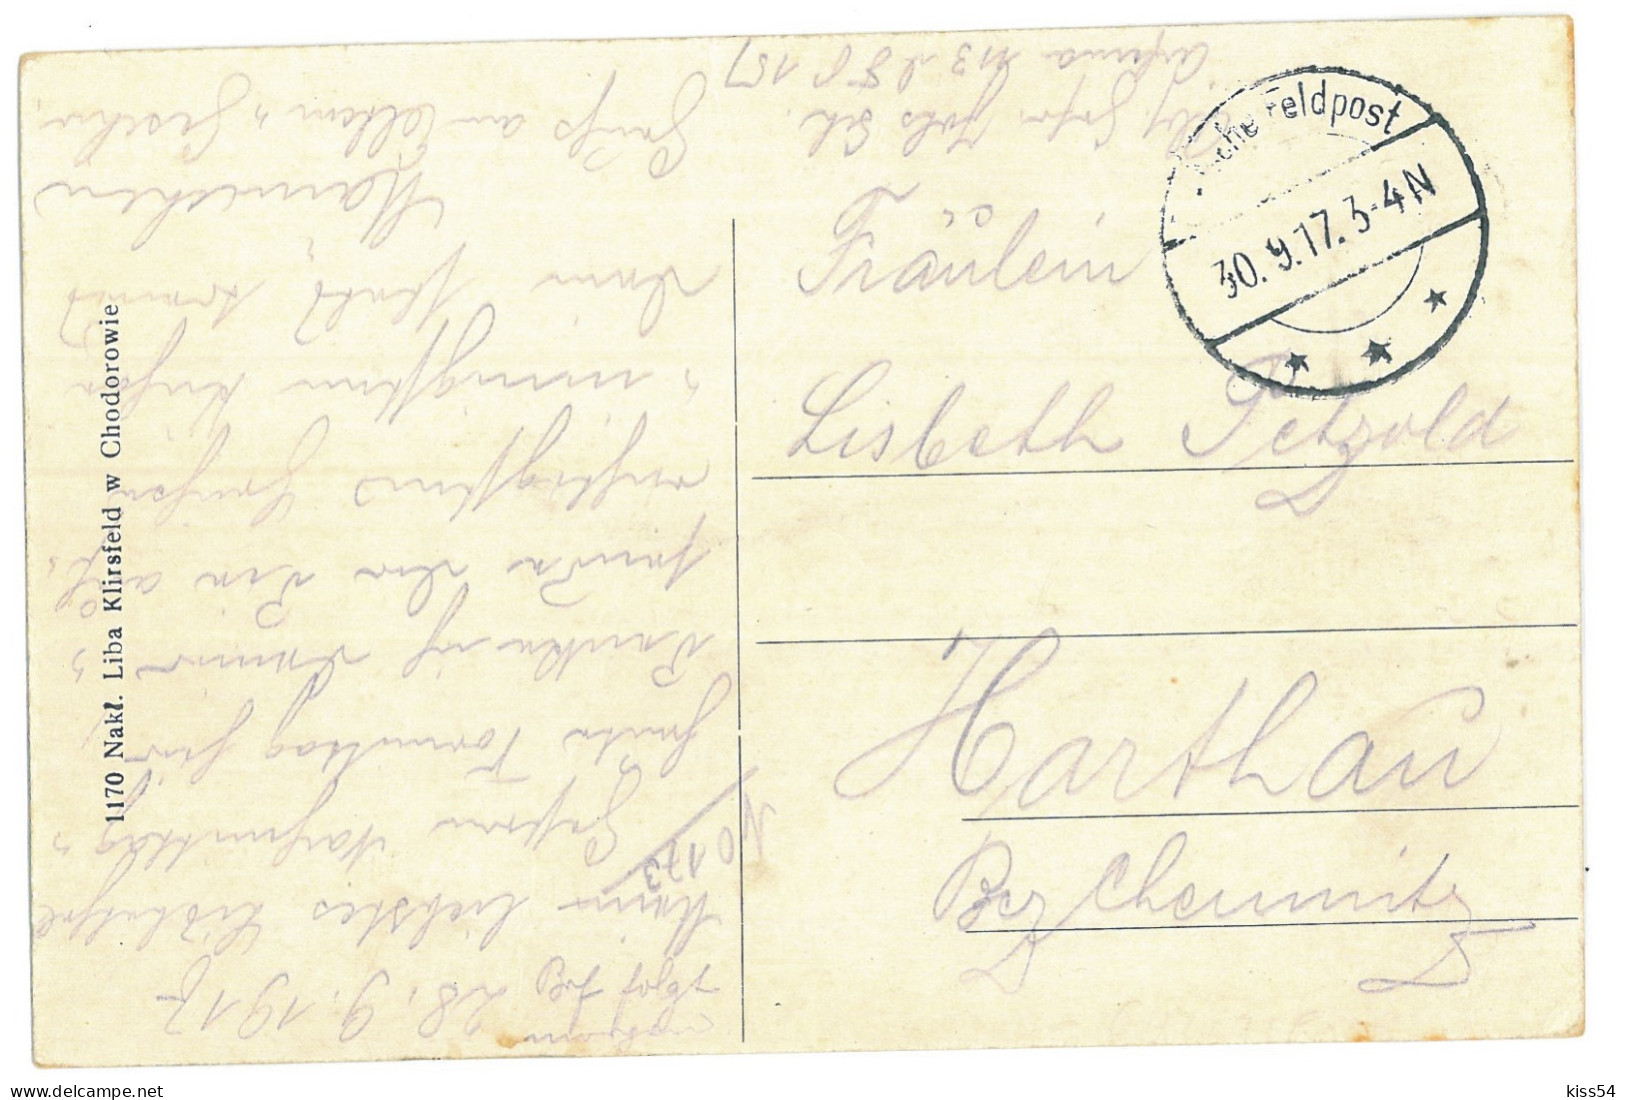 UK 29 - 23534 HODORIV, Lvov, Market, Ukraine - Old Postcard, CENSOR - Used - 1917 - Ukraine